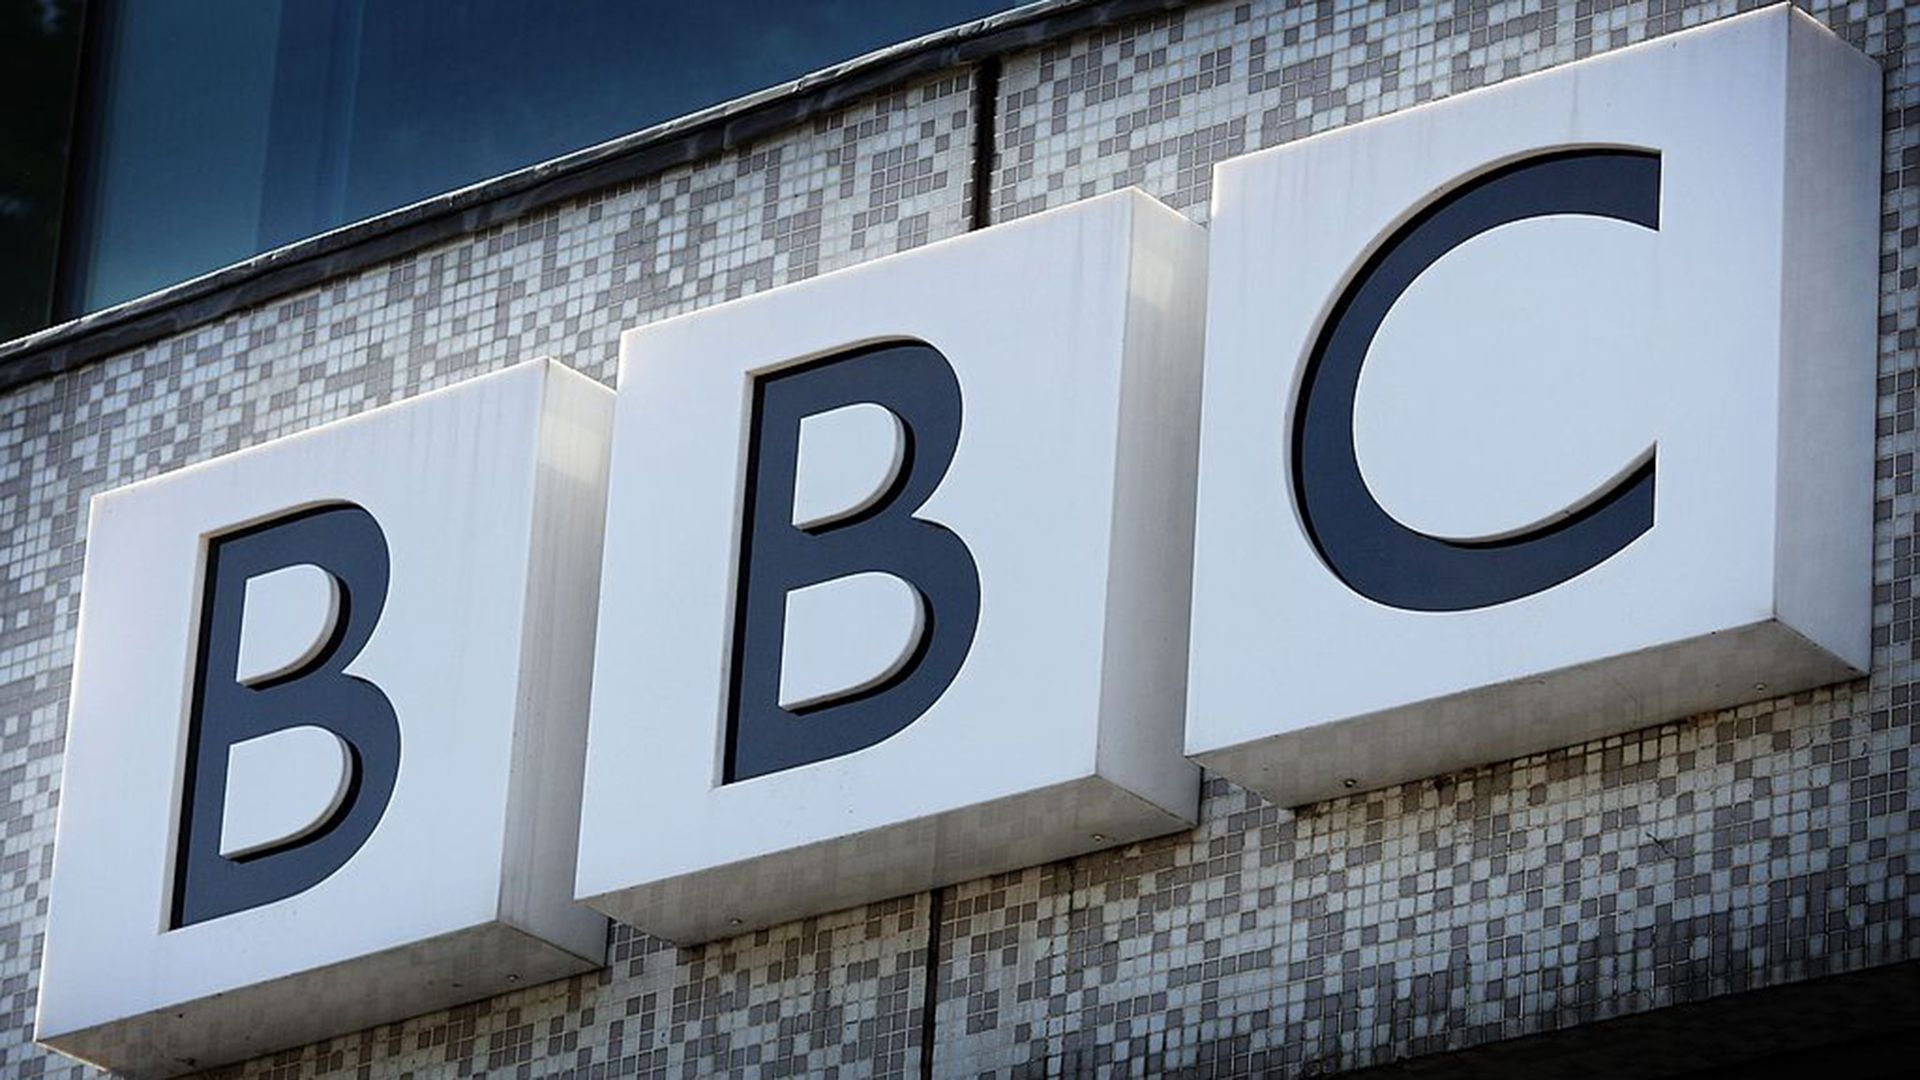 BBC logo on a sign. 